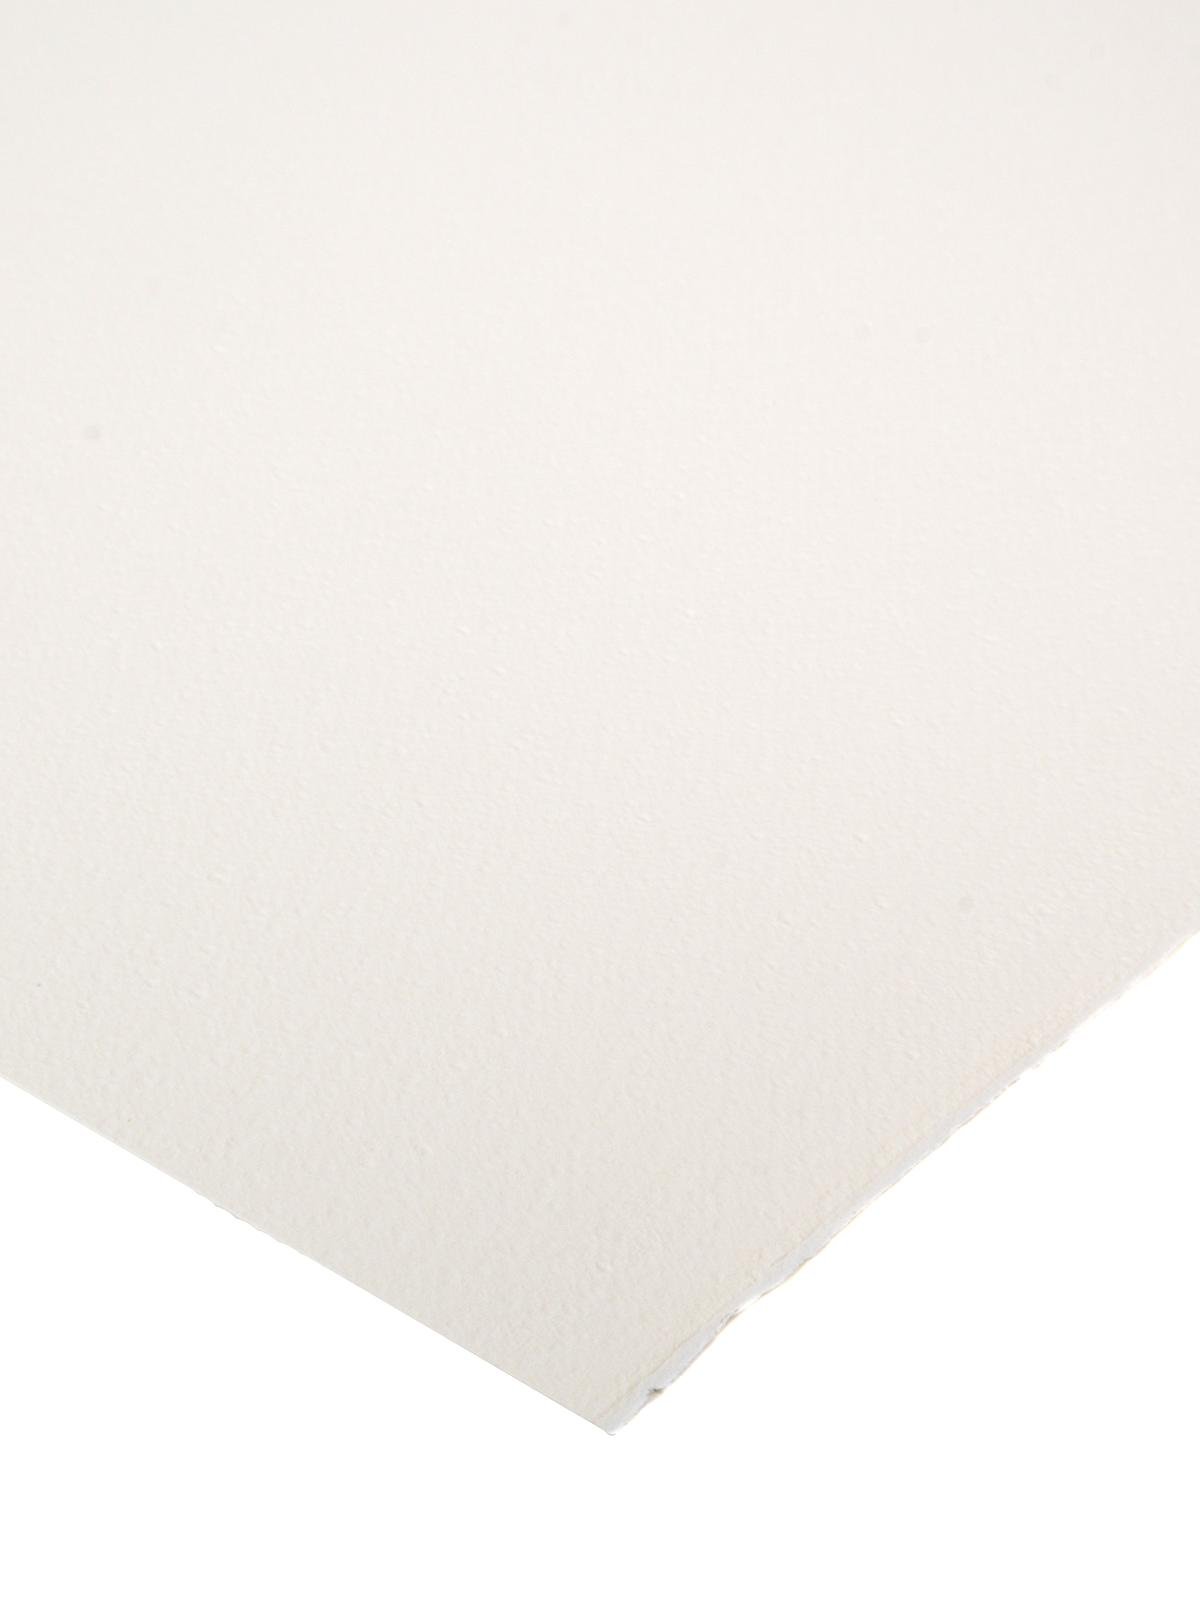 Artistico Traditional White Watercolor Paper - 140 lb. Rough, 22 x 30, 1  Sheet